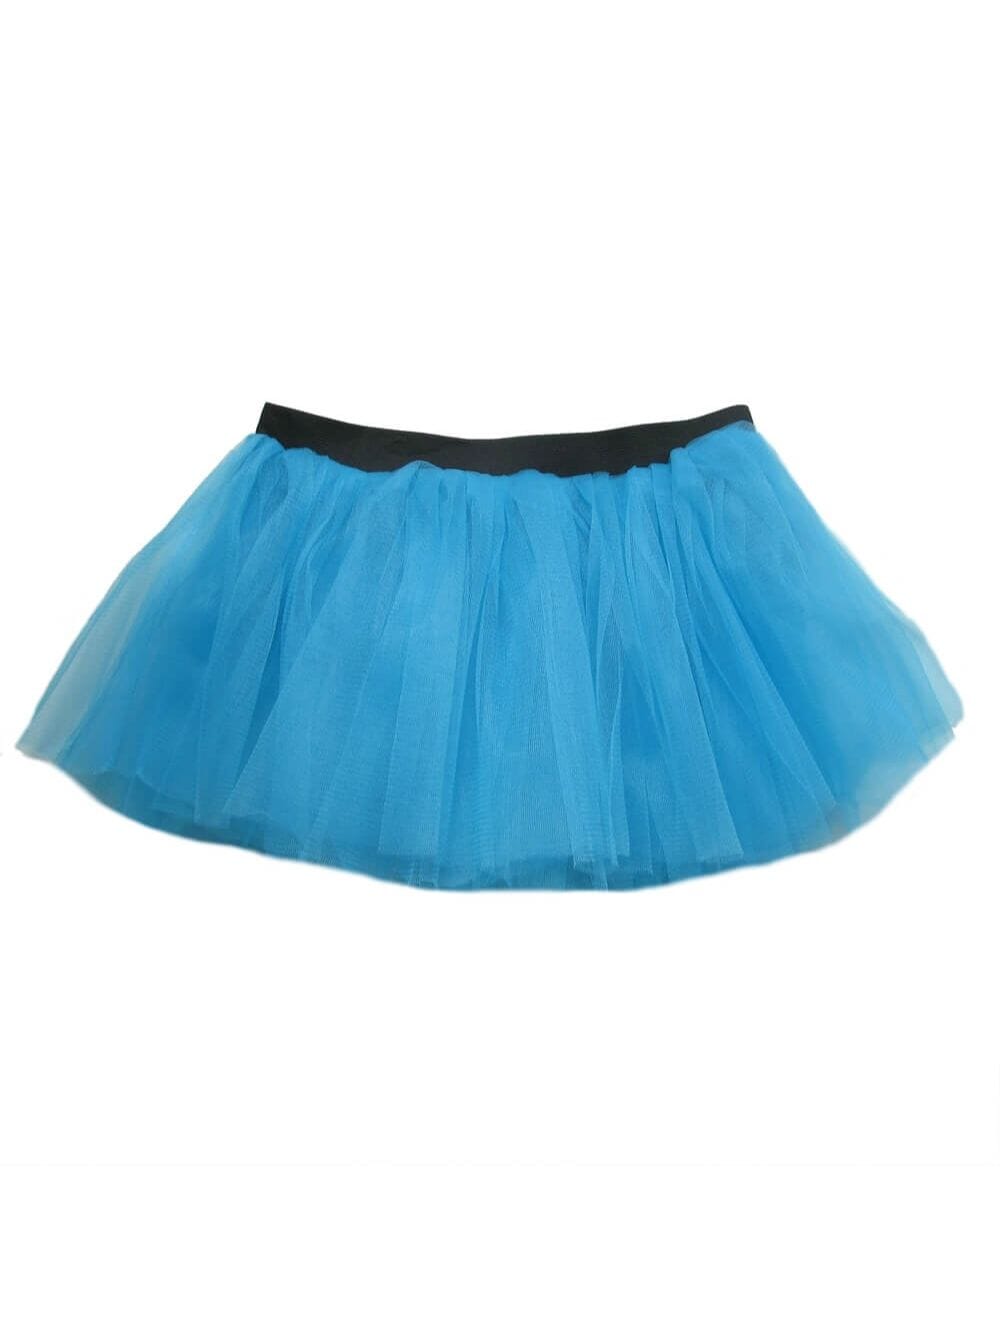 Turquoise Blue Adult Size Women's 5K Running Tutu Skirt Costume - Sydney So Sweet